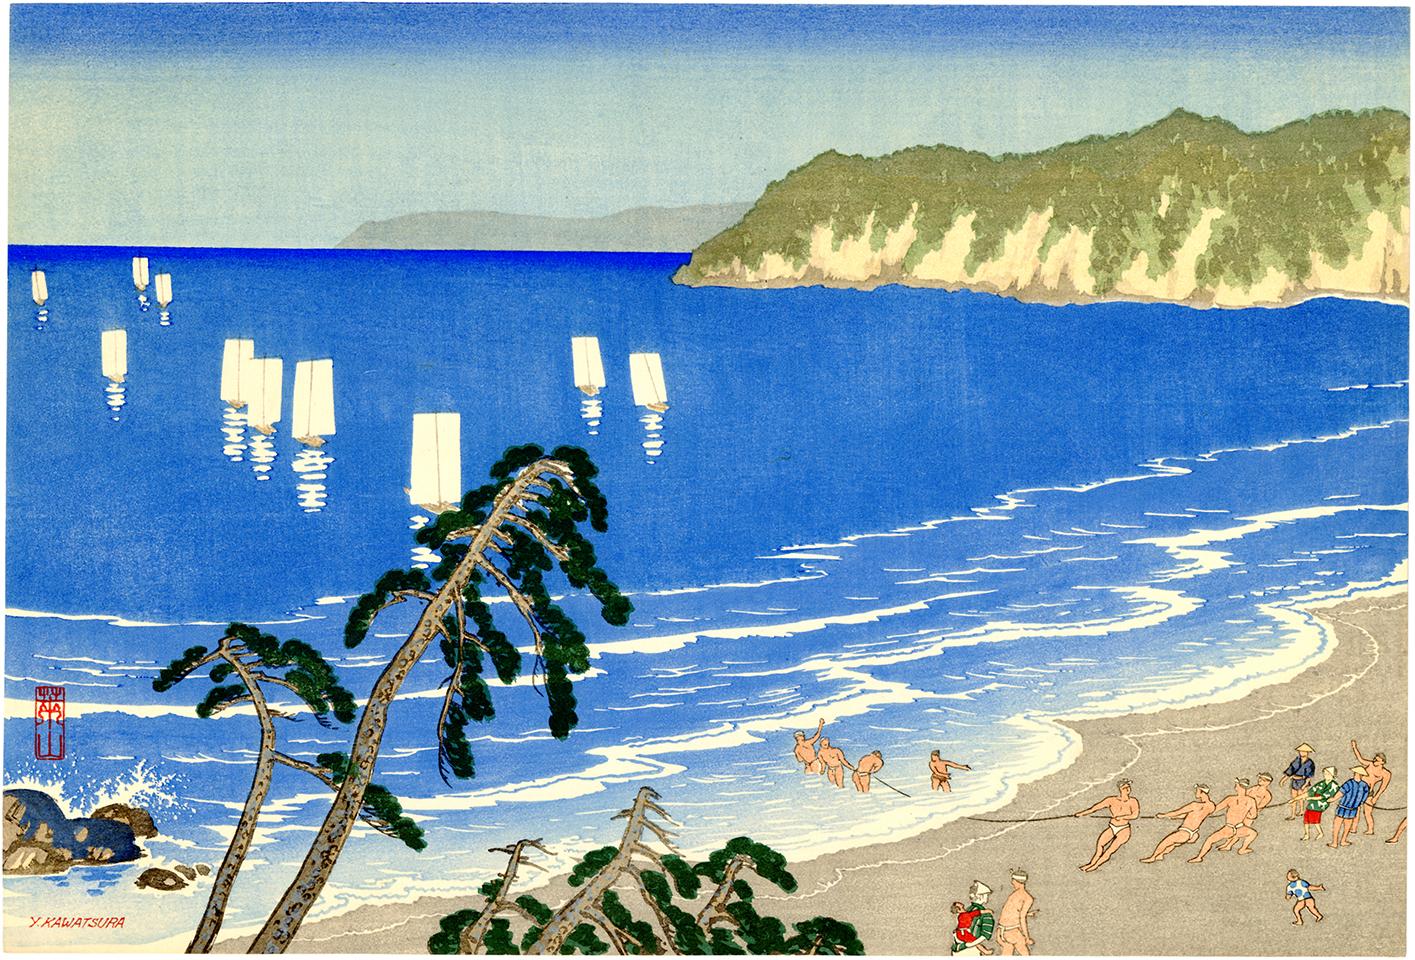 Negoro Raizan Landscape Print - Fishing on the Shore in Summer